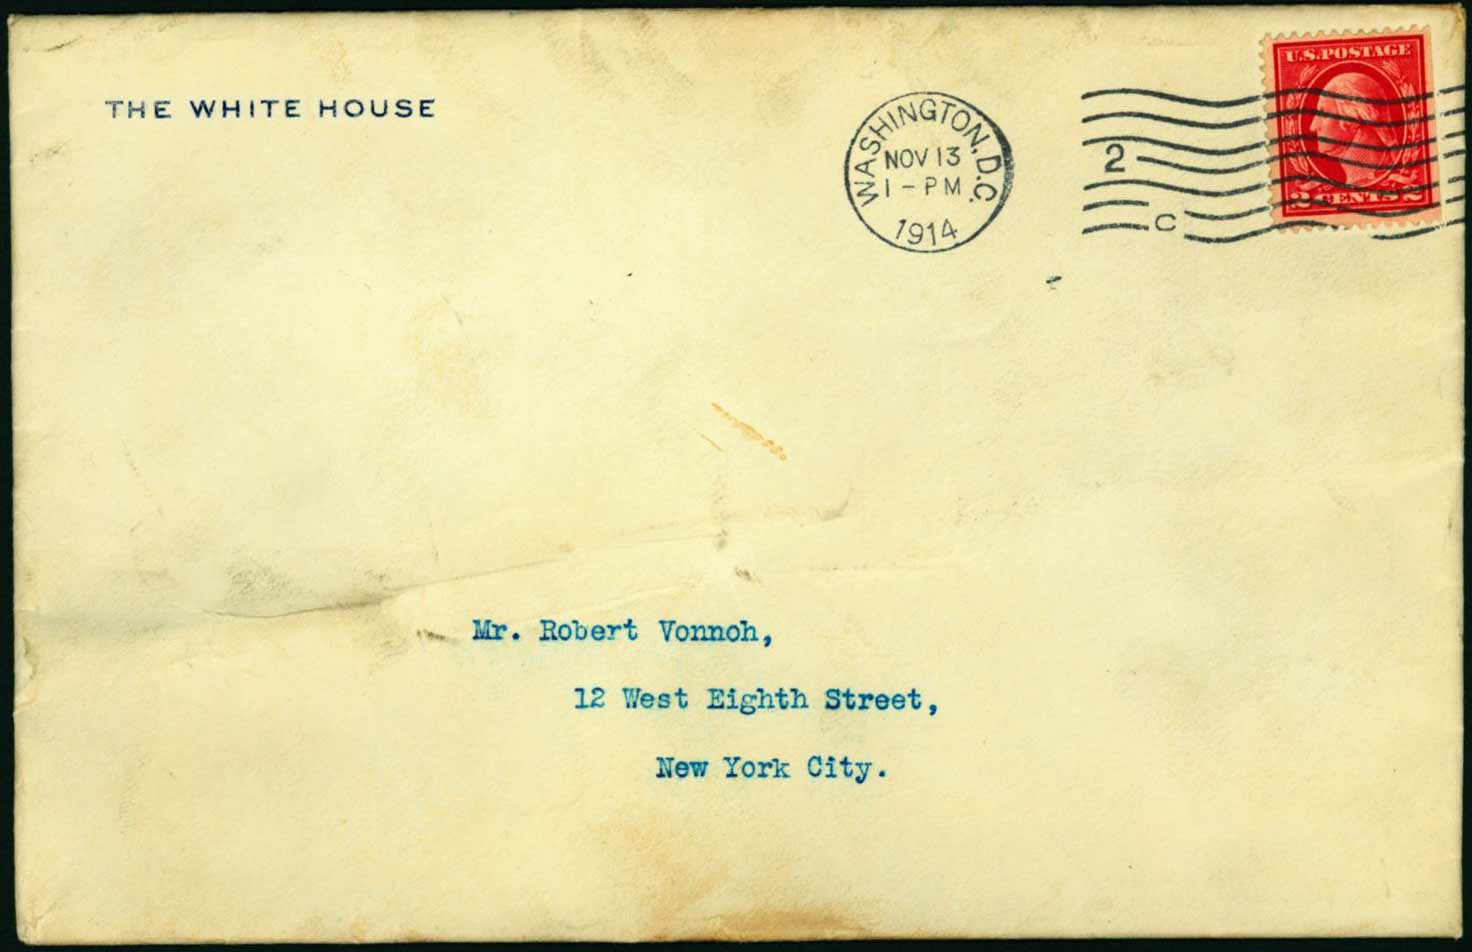 Letters: “My dear Mr. Vonnoh”